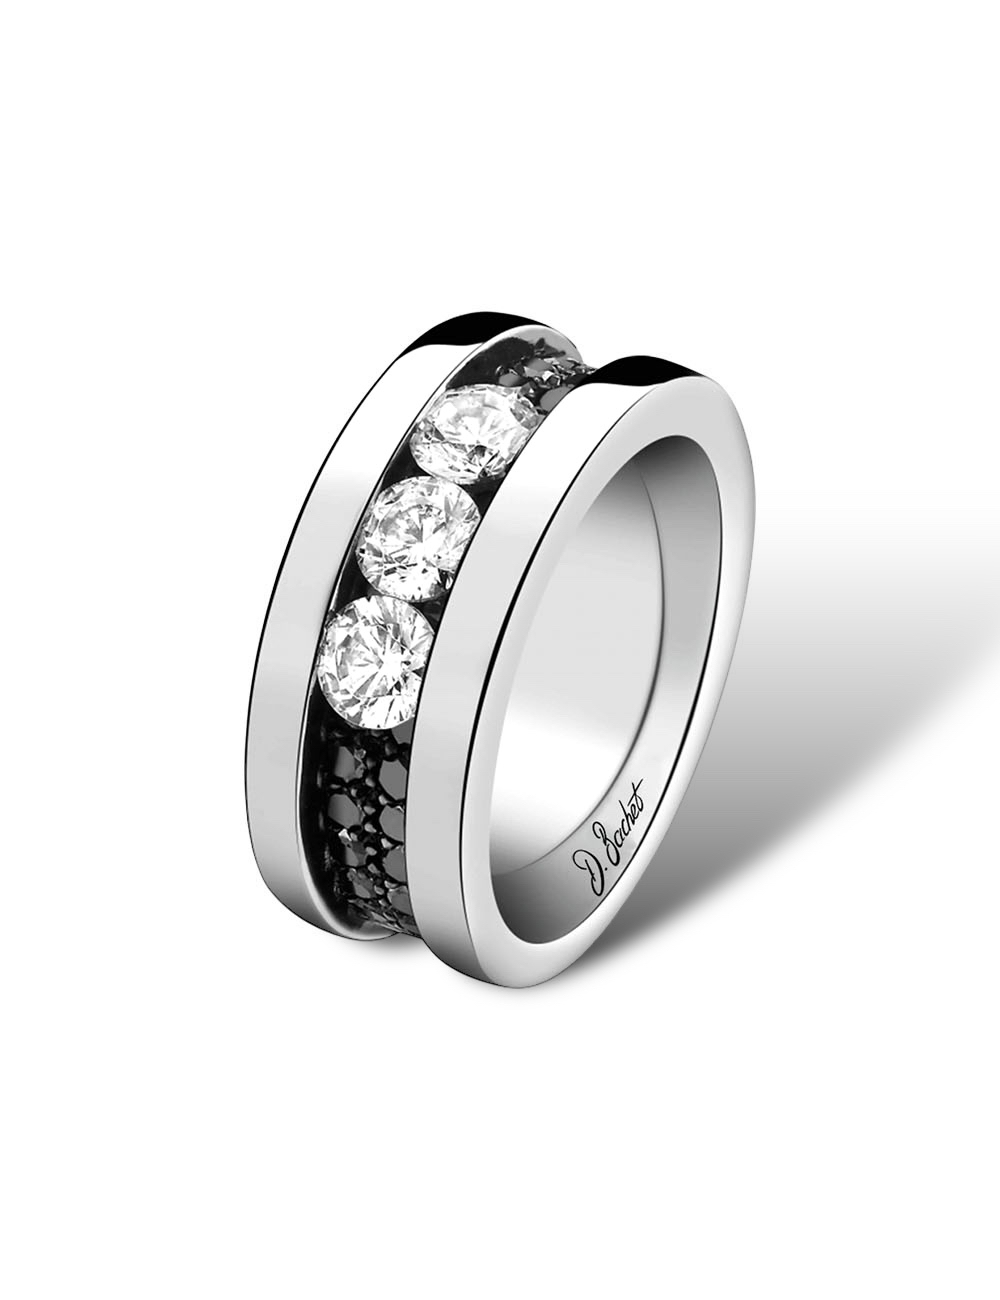 Luxury women's ring: three diamonds, symbolizing elegance and love.